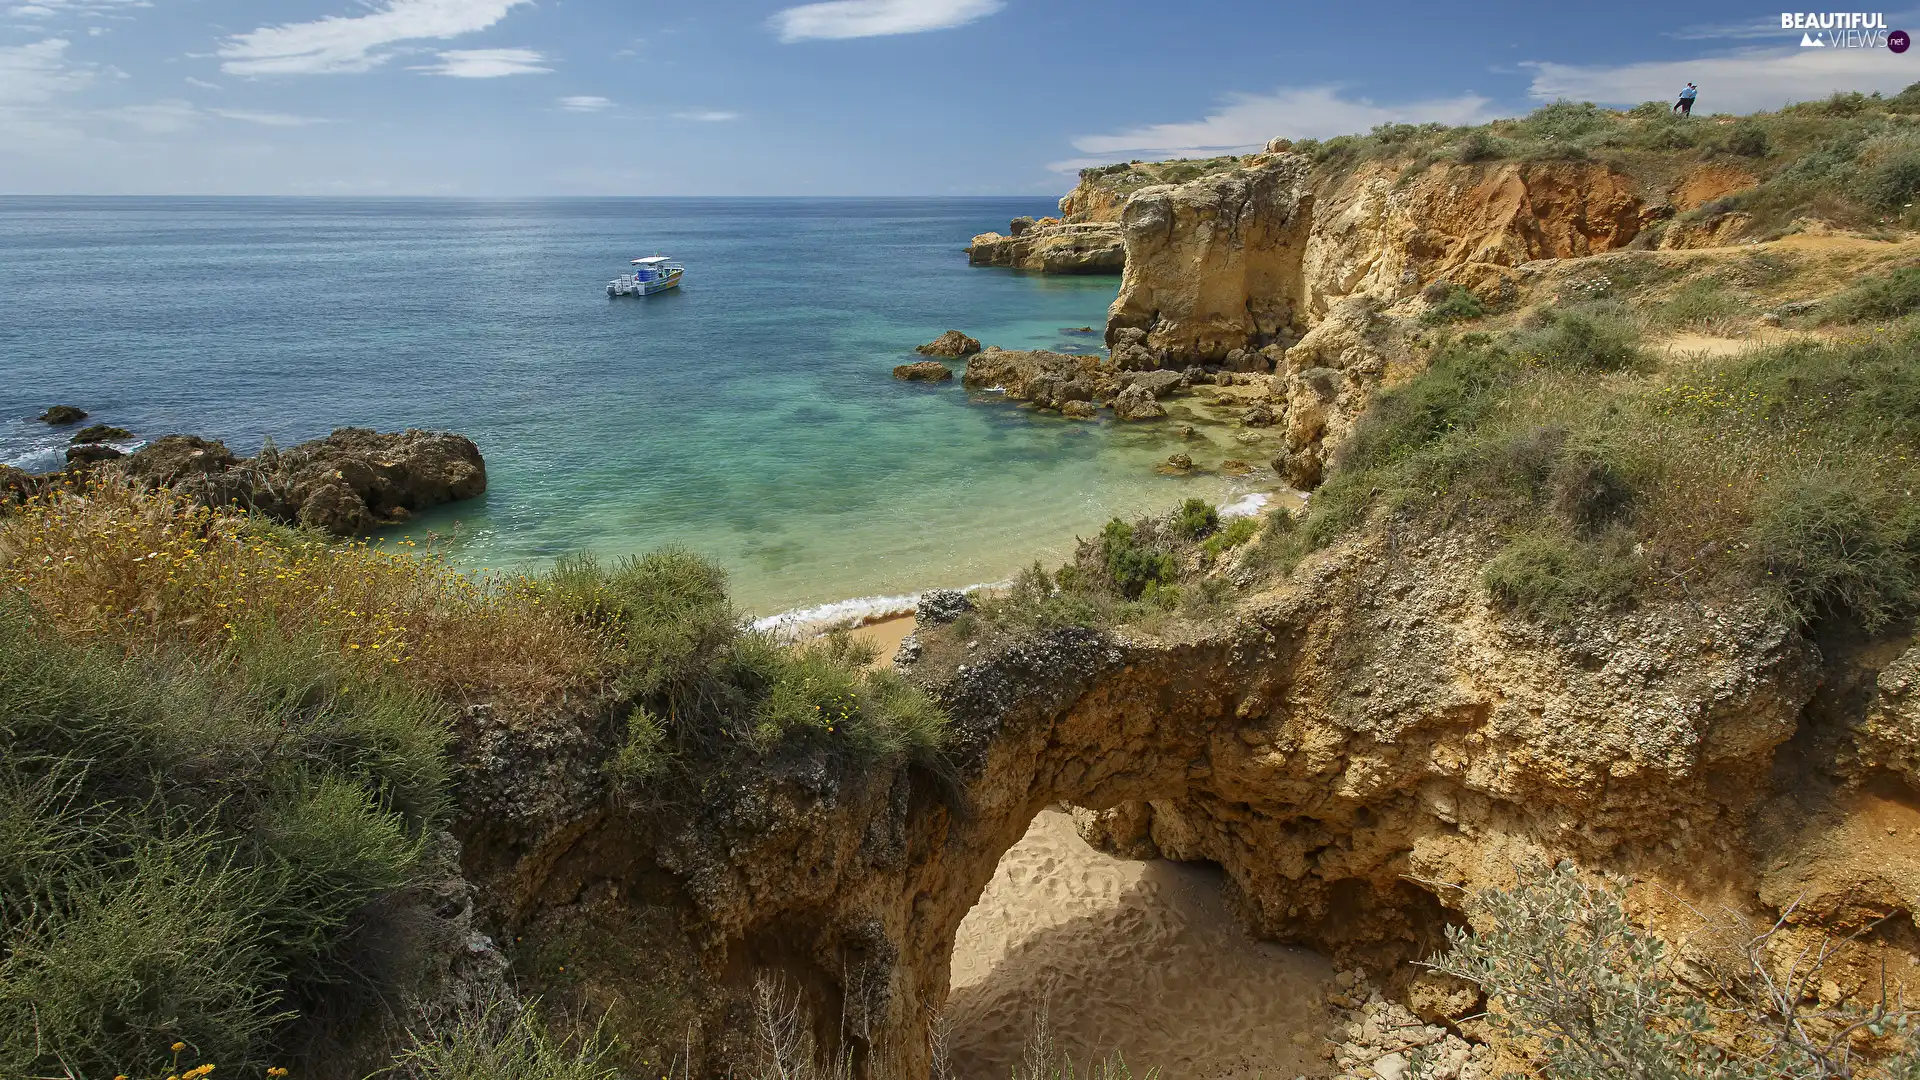 Coast, Portugal, Algarve Region, Praia dos Arrifes Beach, sea, Motor boat, rocks, VEGETATION, Cliffs